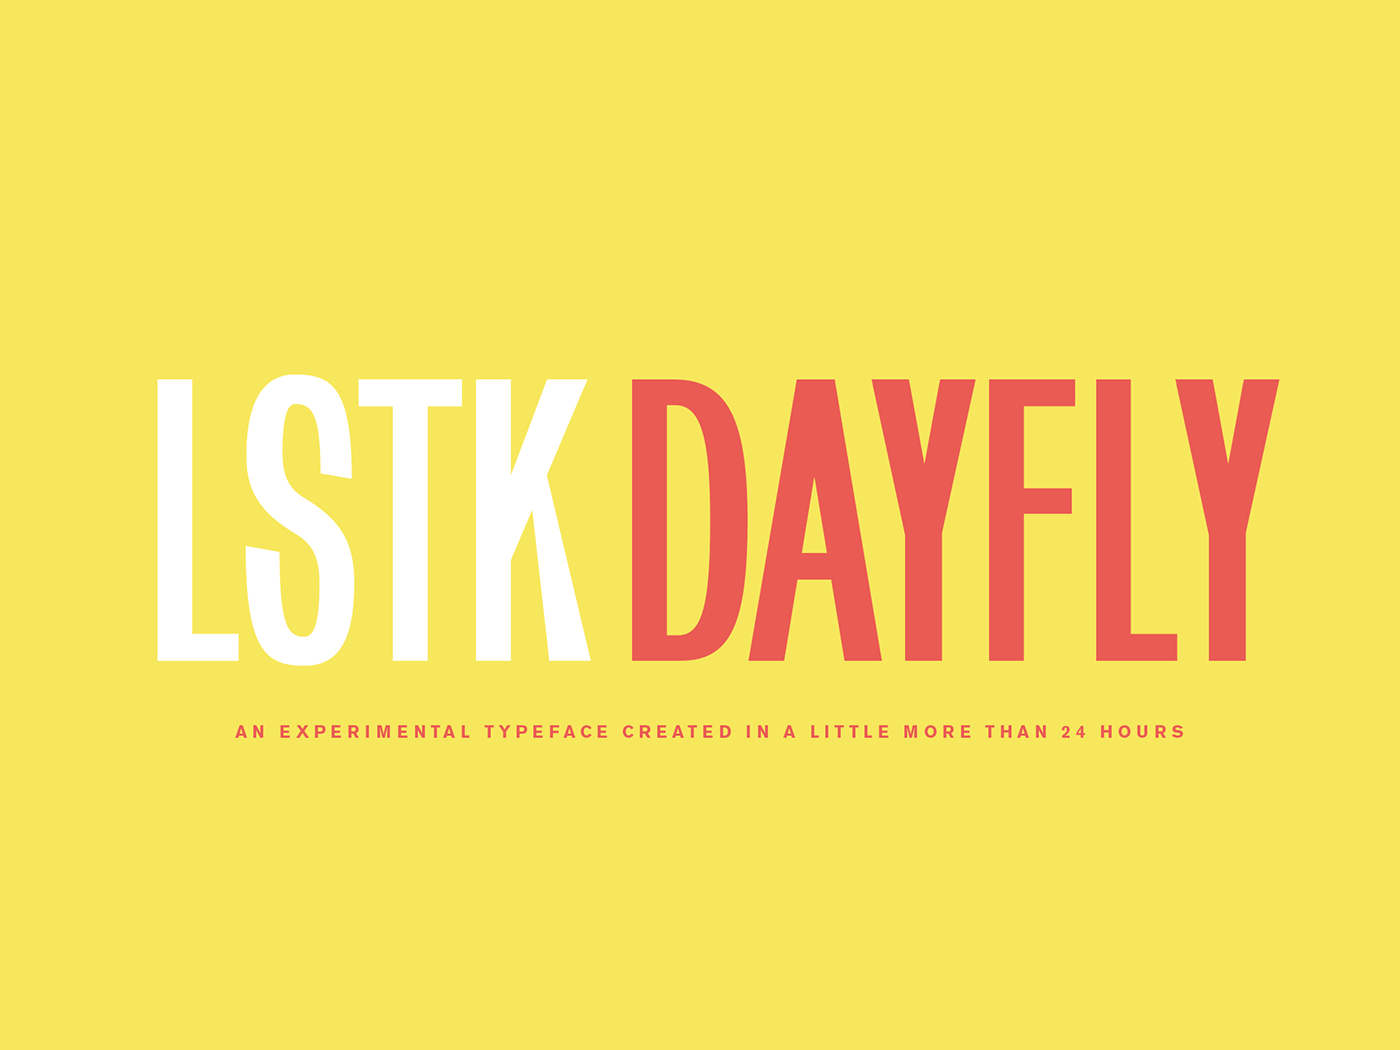 dayfly